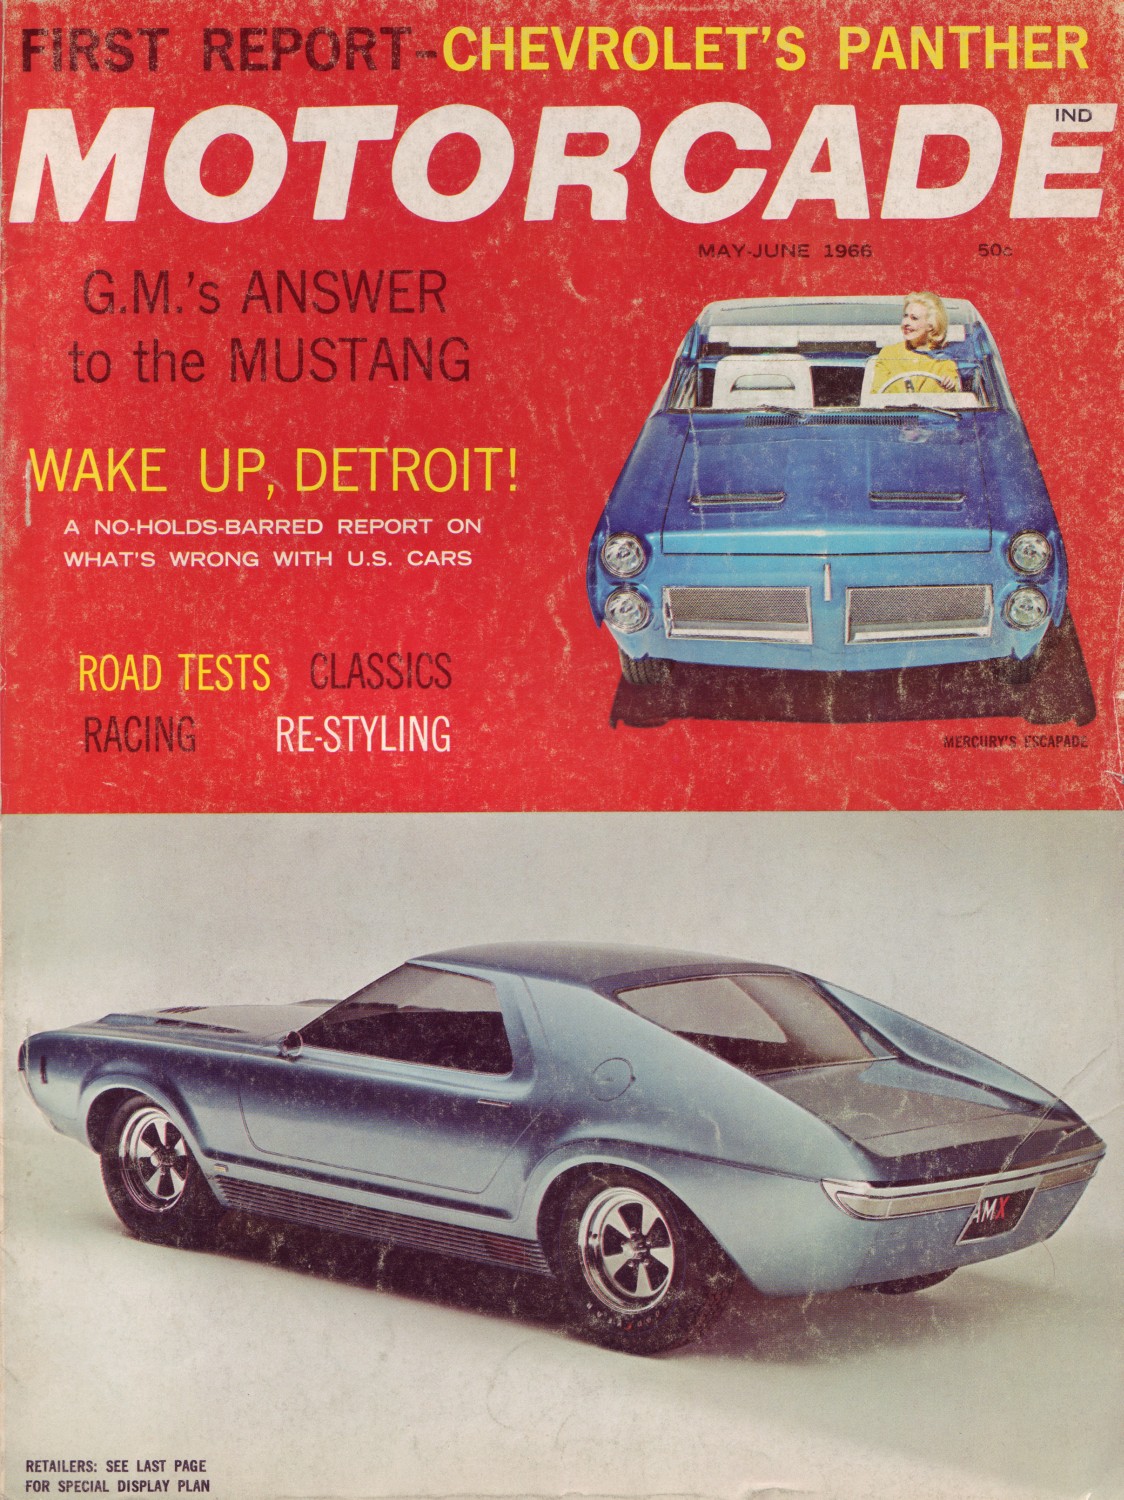 1966-05-motorcade-00-cover-full